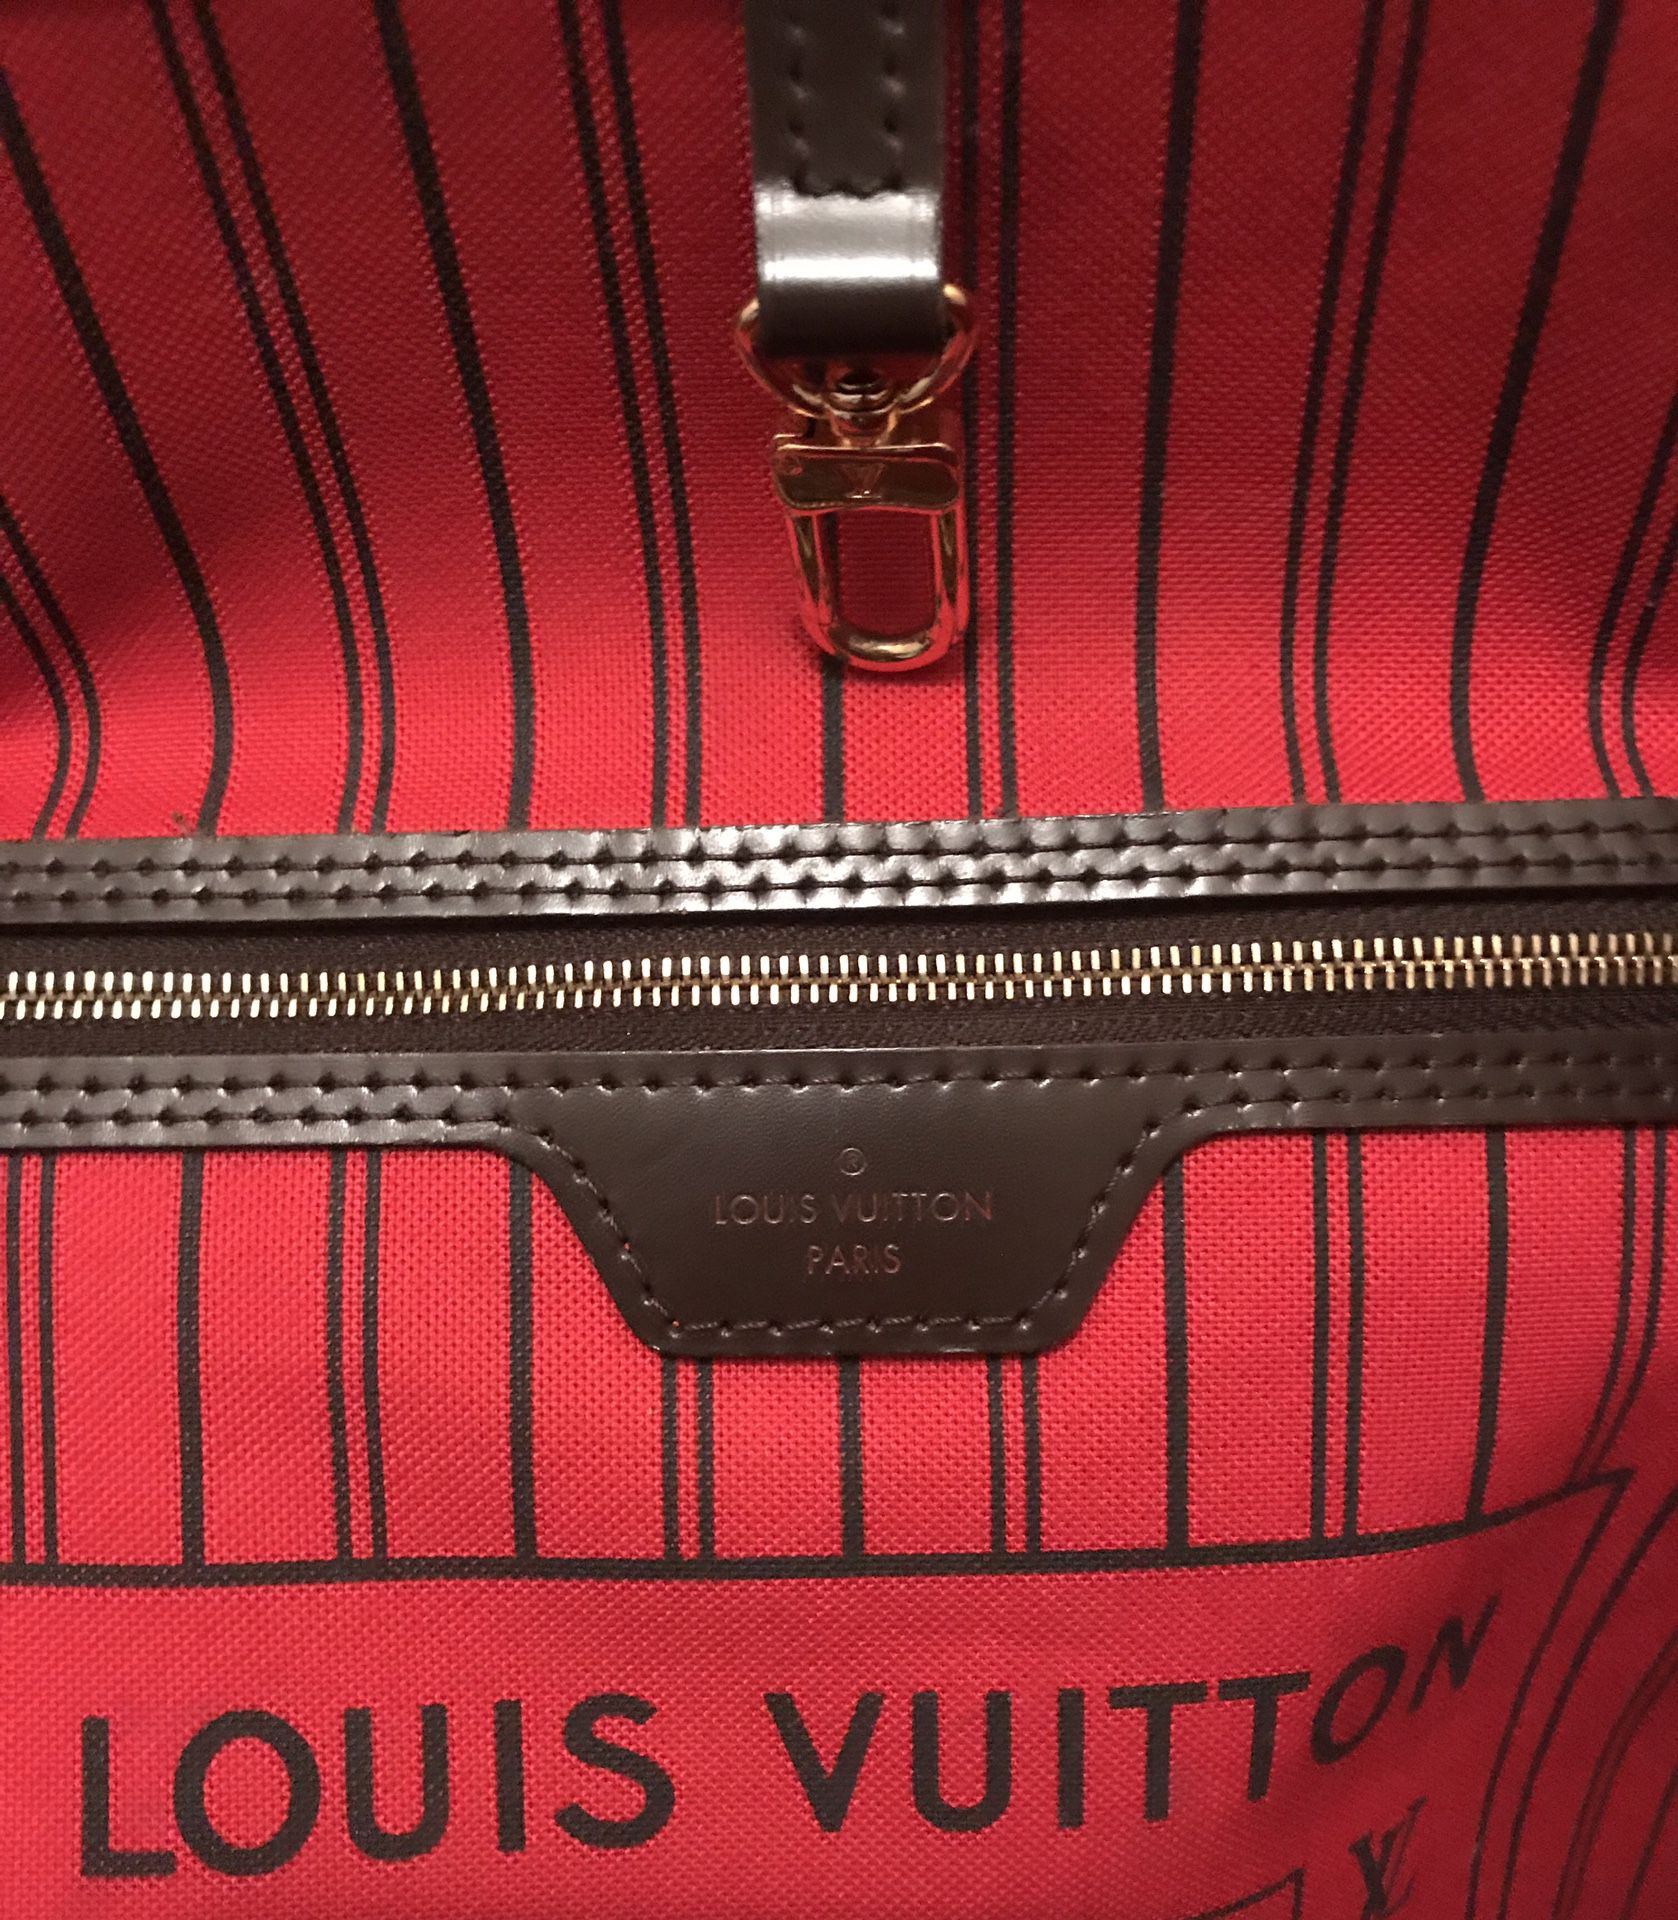 Louis Vuitton Neverfull GM Damier Ebene for Sale in Houston, TX - OfferUp